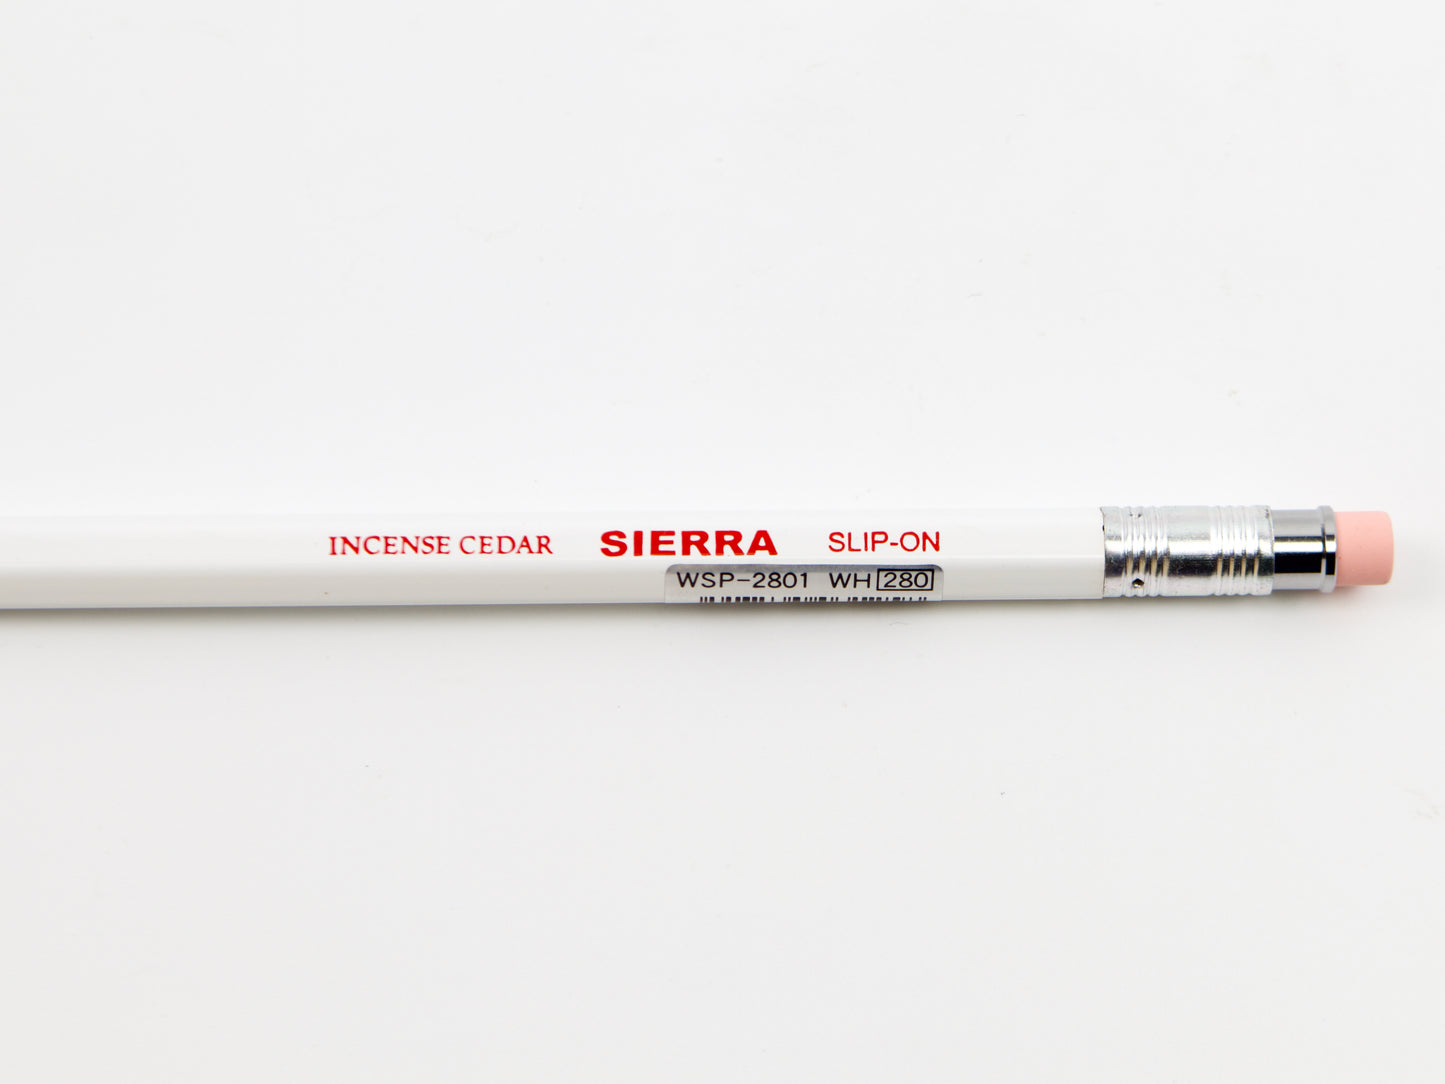 Sierra Incense Cedar Mechanical Pencil